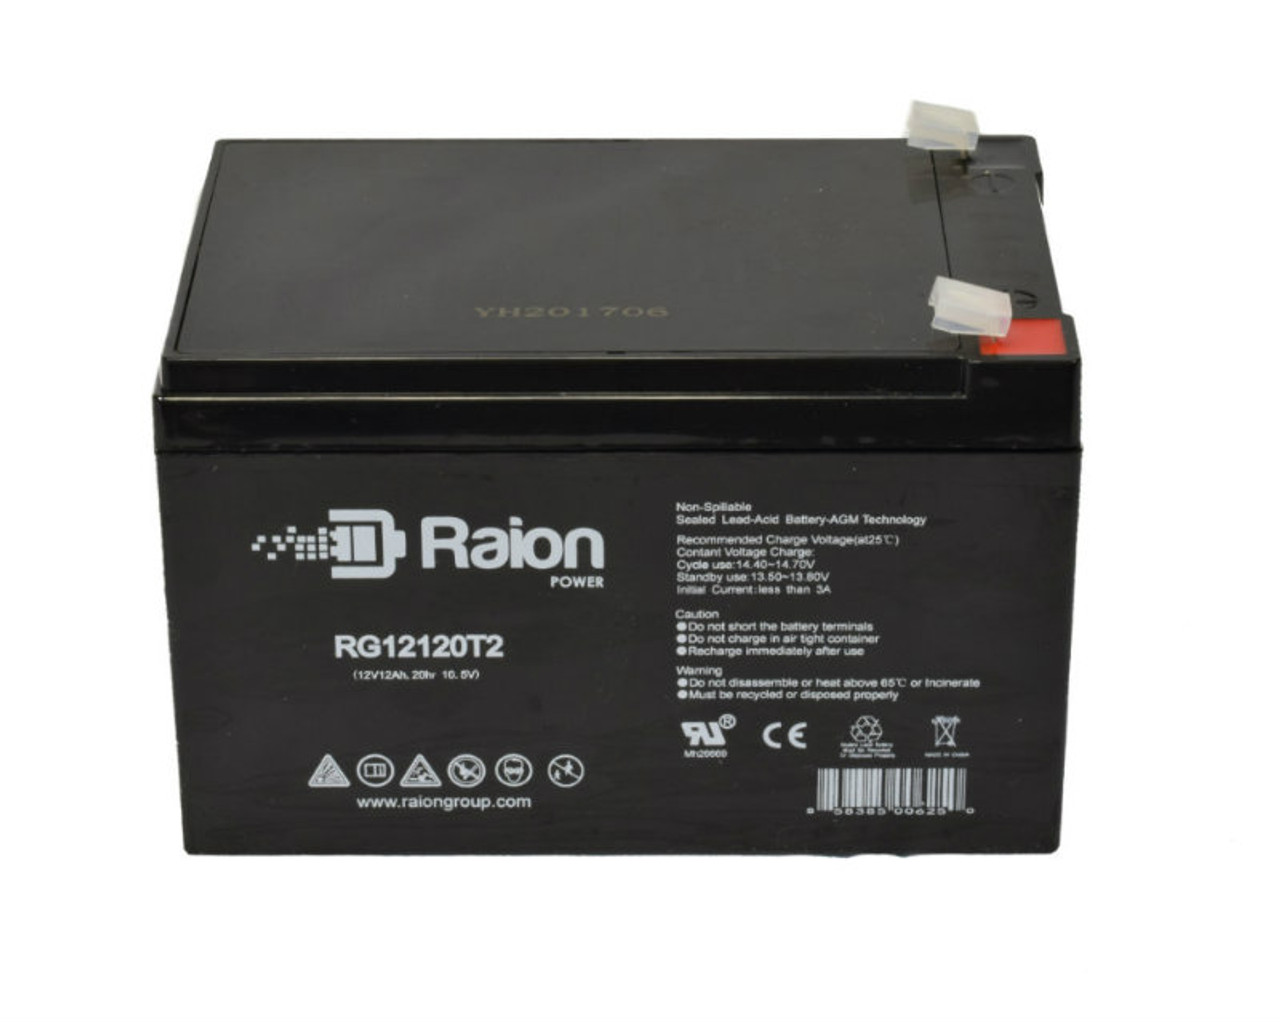 Raion Power RG12120T2 SLA Battery for Powerfit S312/12 S